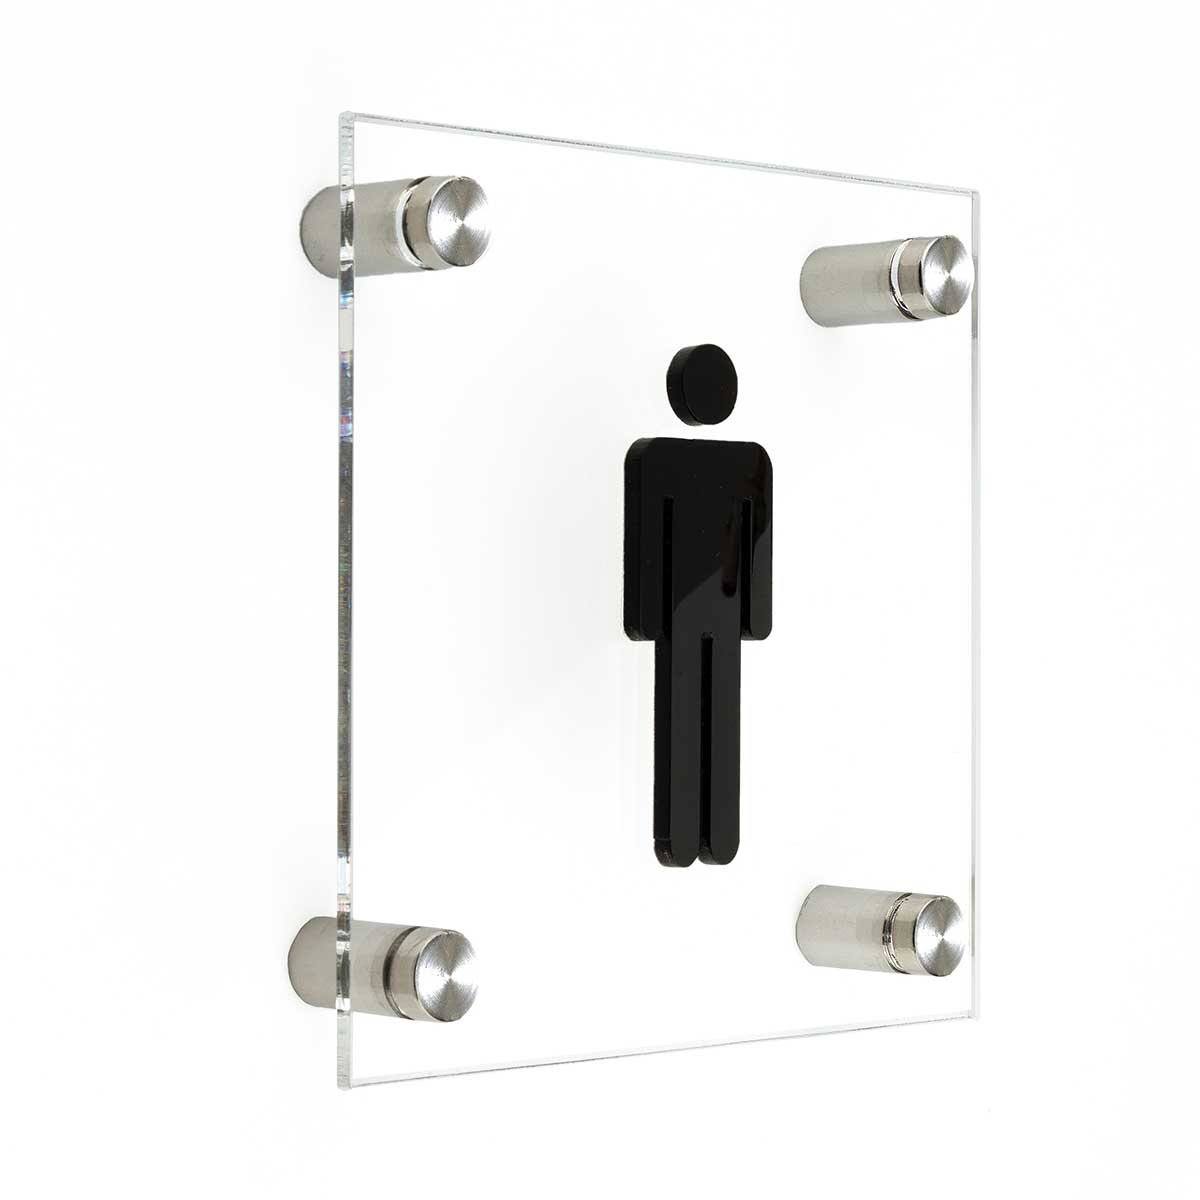 Men Sign of Restroom Bathroom Signs metal holders Bsign